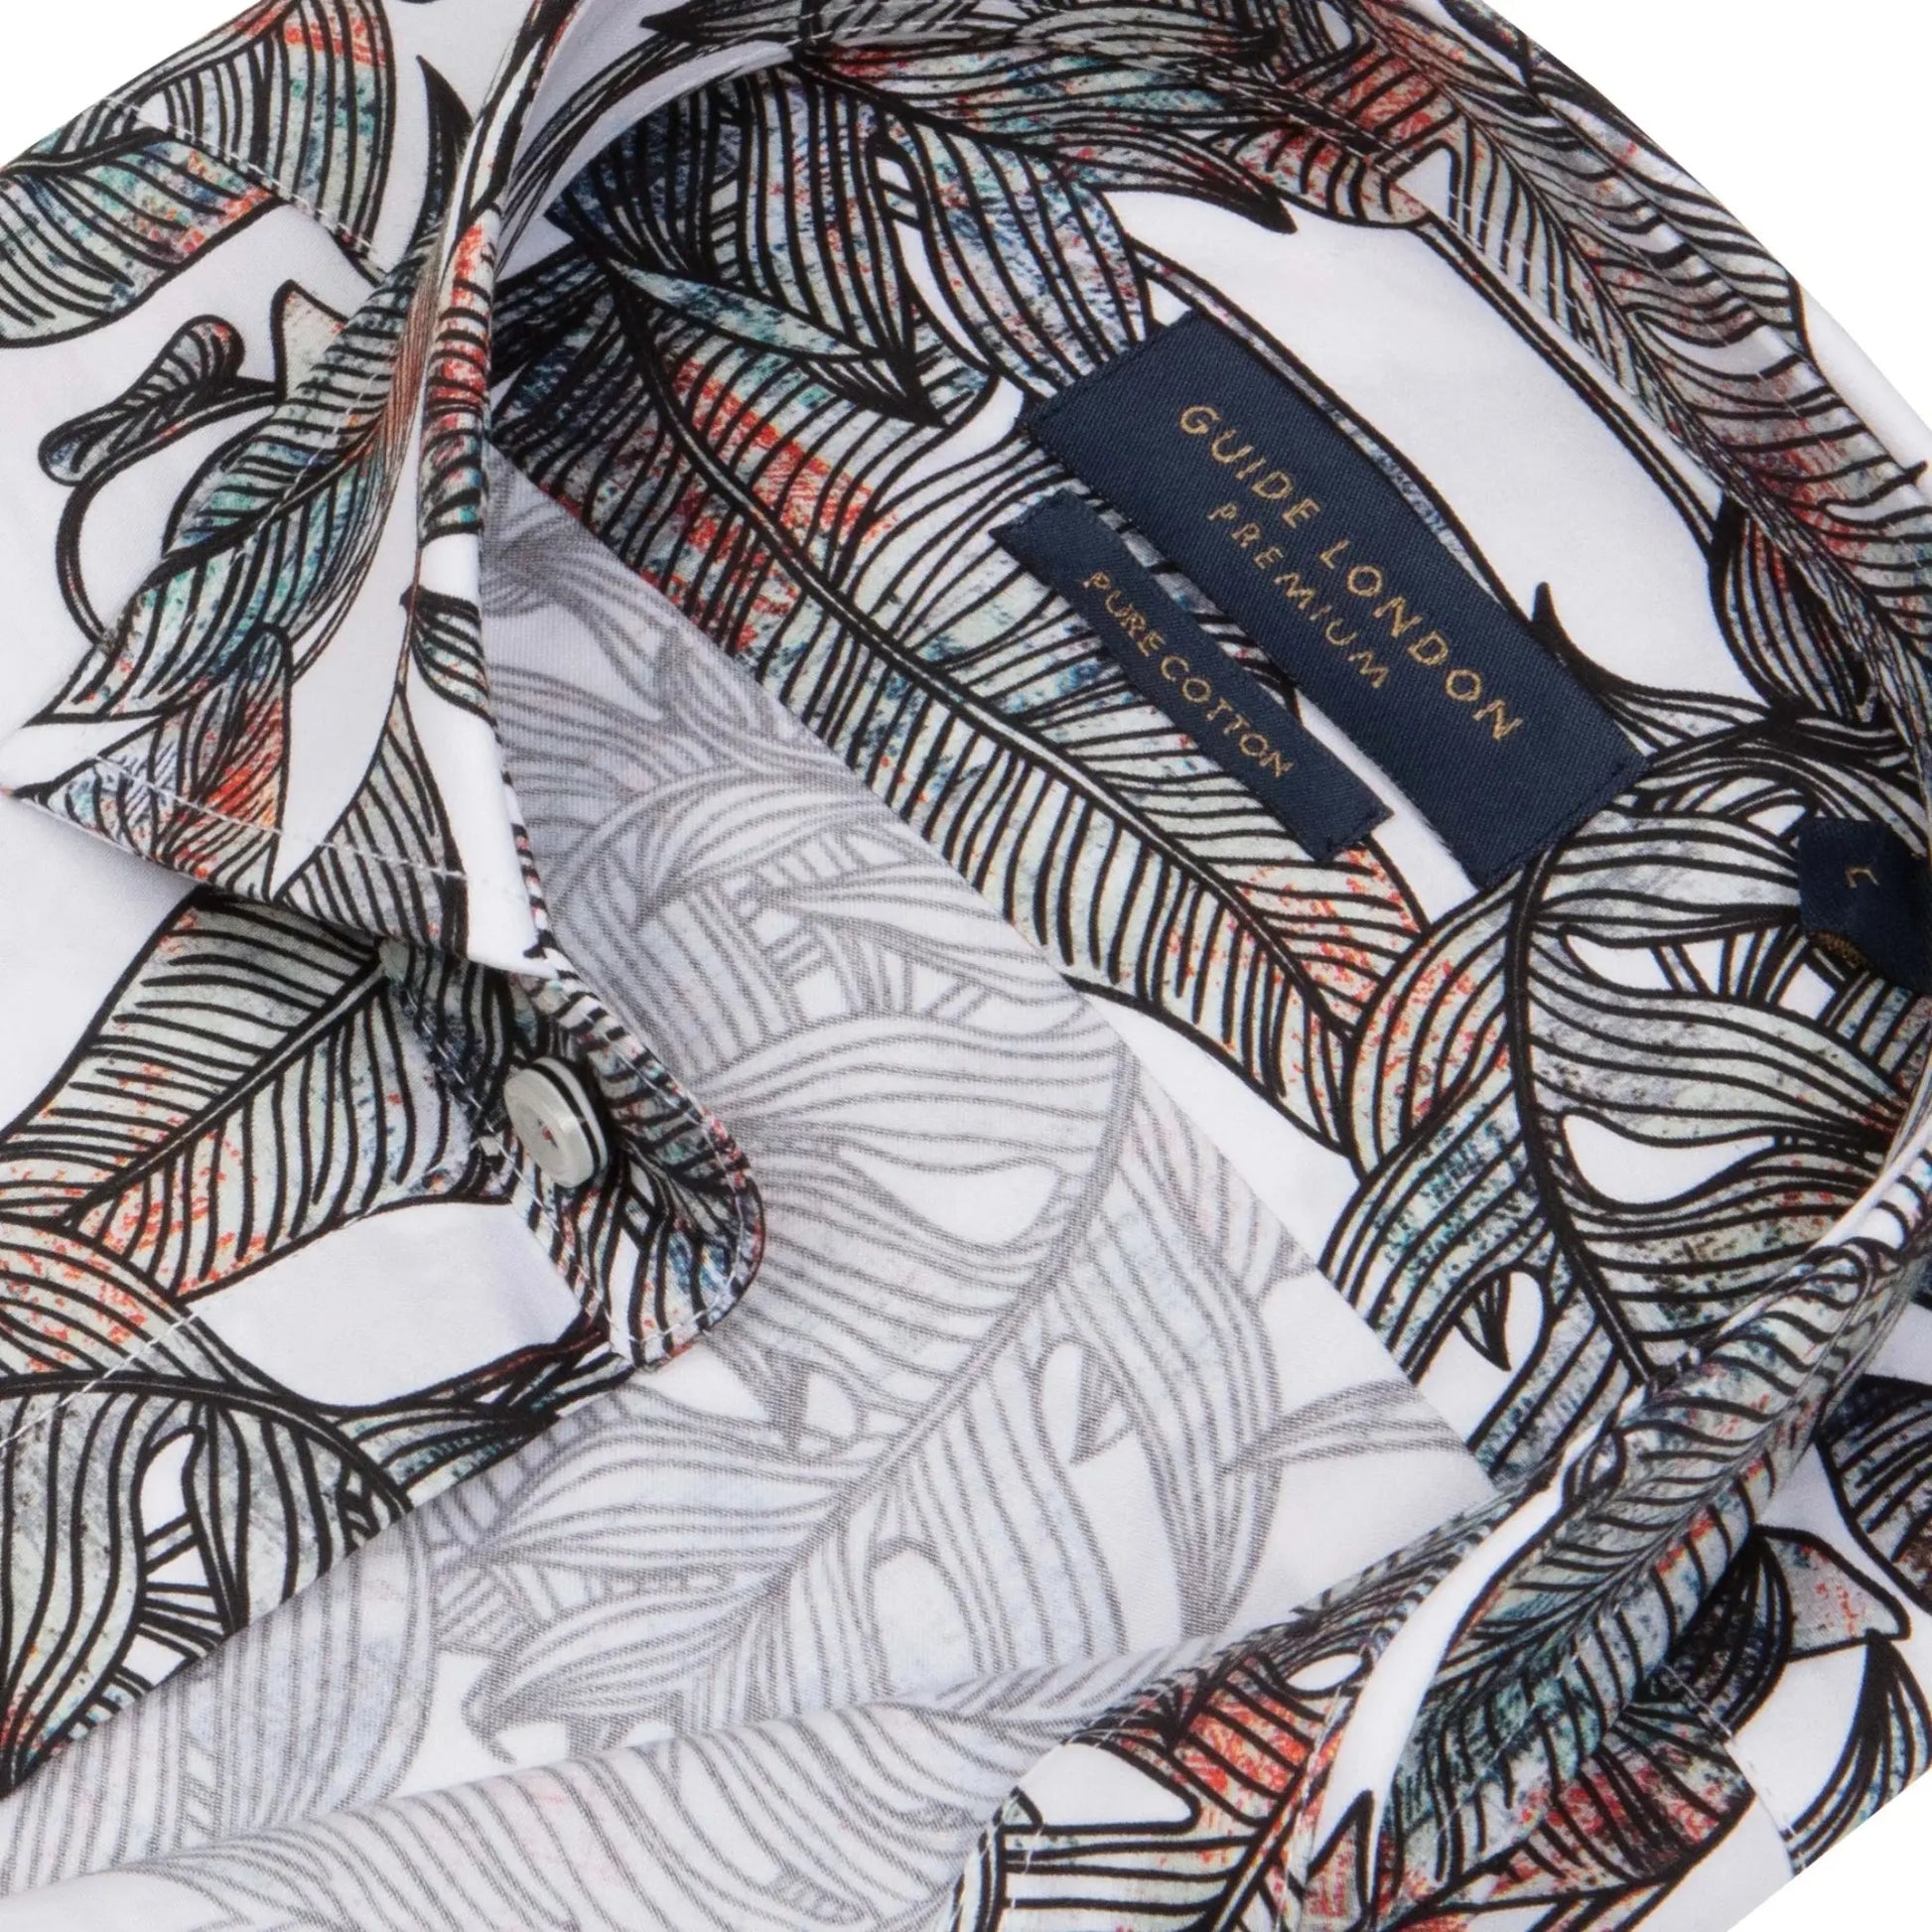 Buy Guide London Stencil Leaf Print Shirt - Multi | Long-Sleeved Shirtss at Woven Durham